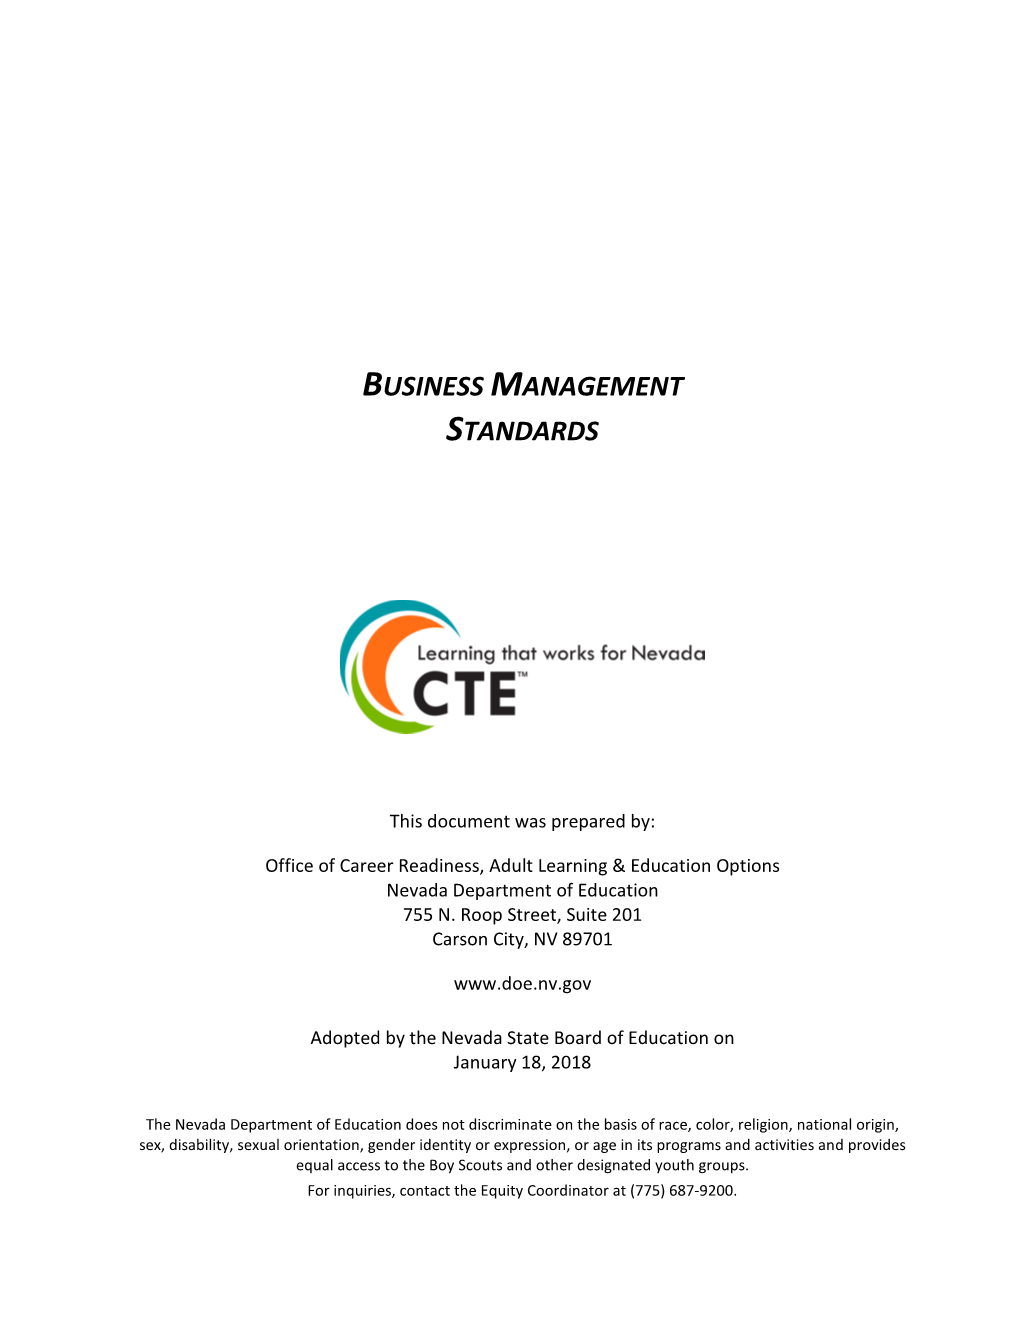 Nevada CTE Business Management Standards